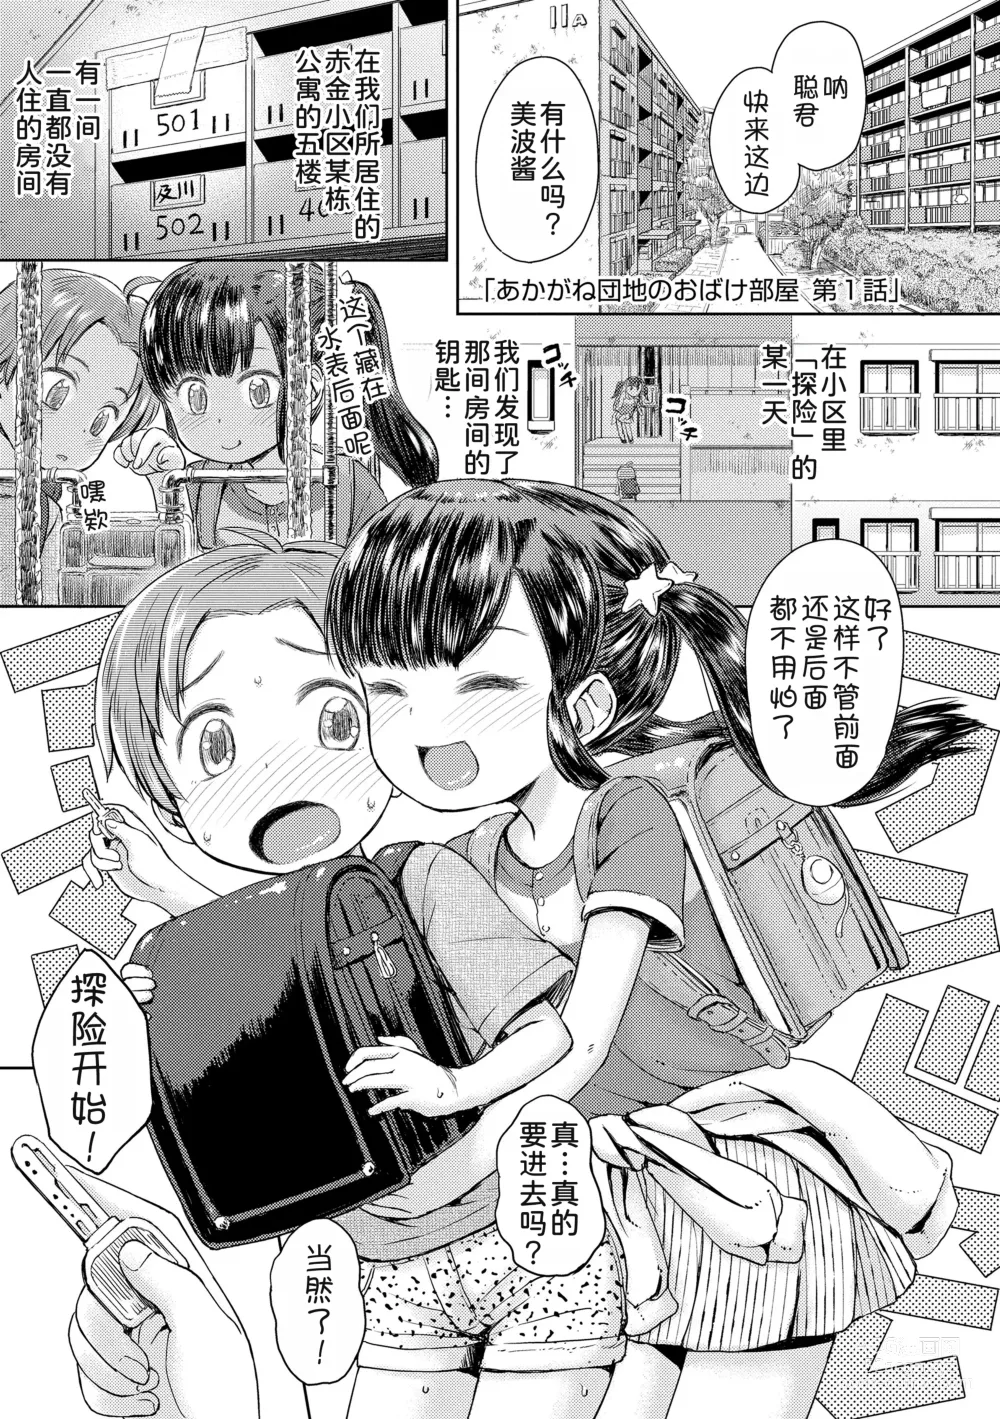 Page 2 of manga Akagane Danchi no Obake Heya Ch. 1-3